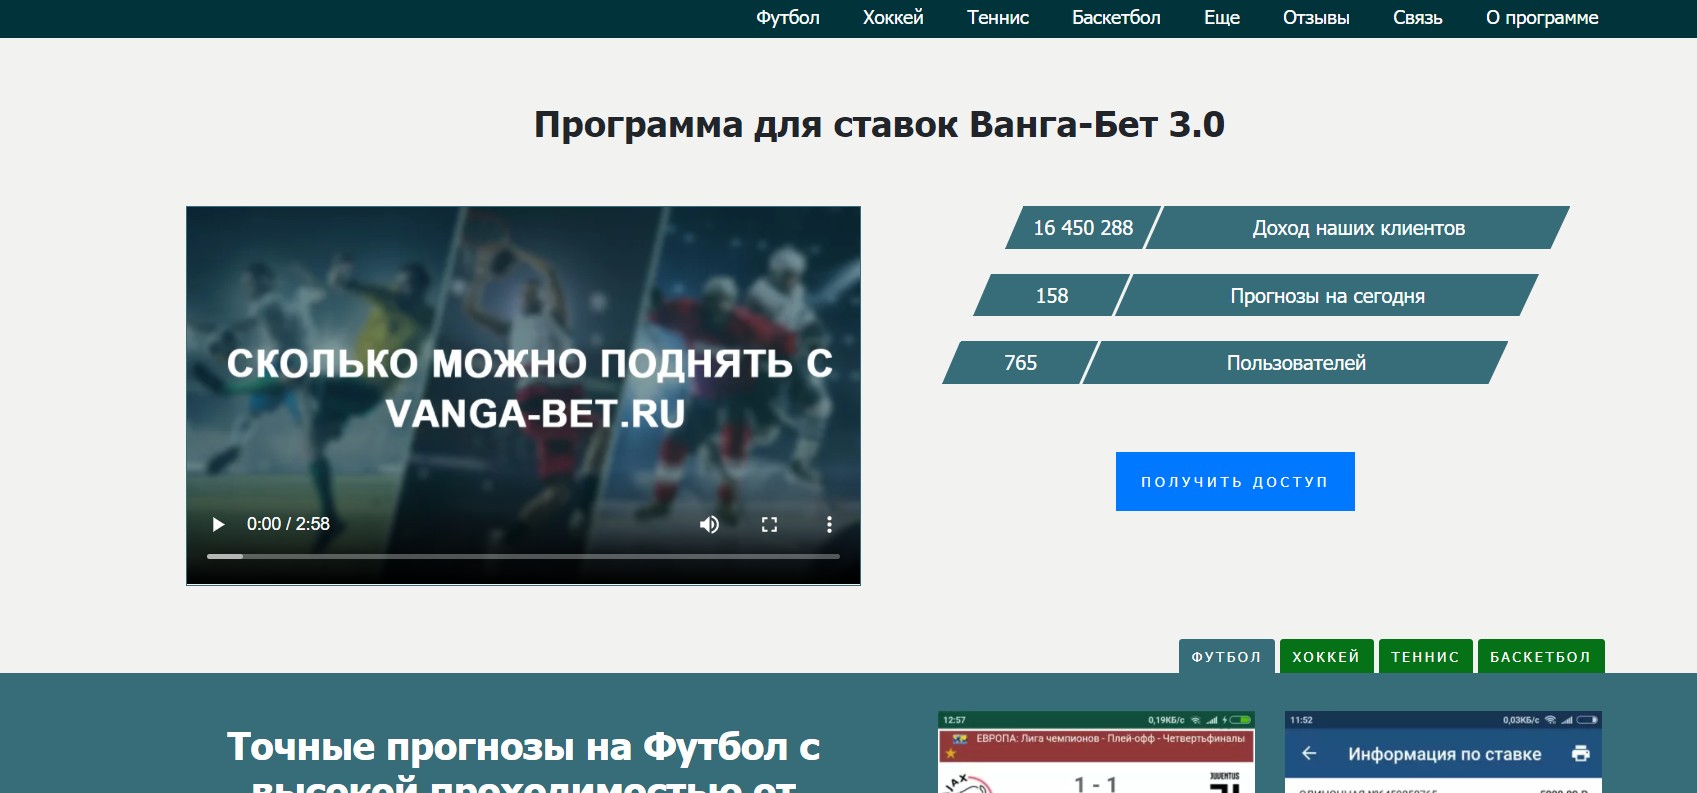 Внешний вид сайта vanga-bet ru с прогнозами